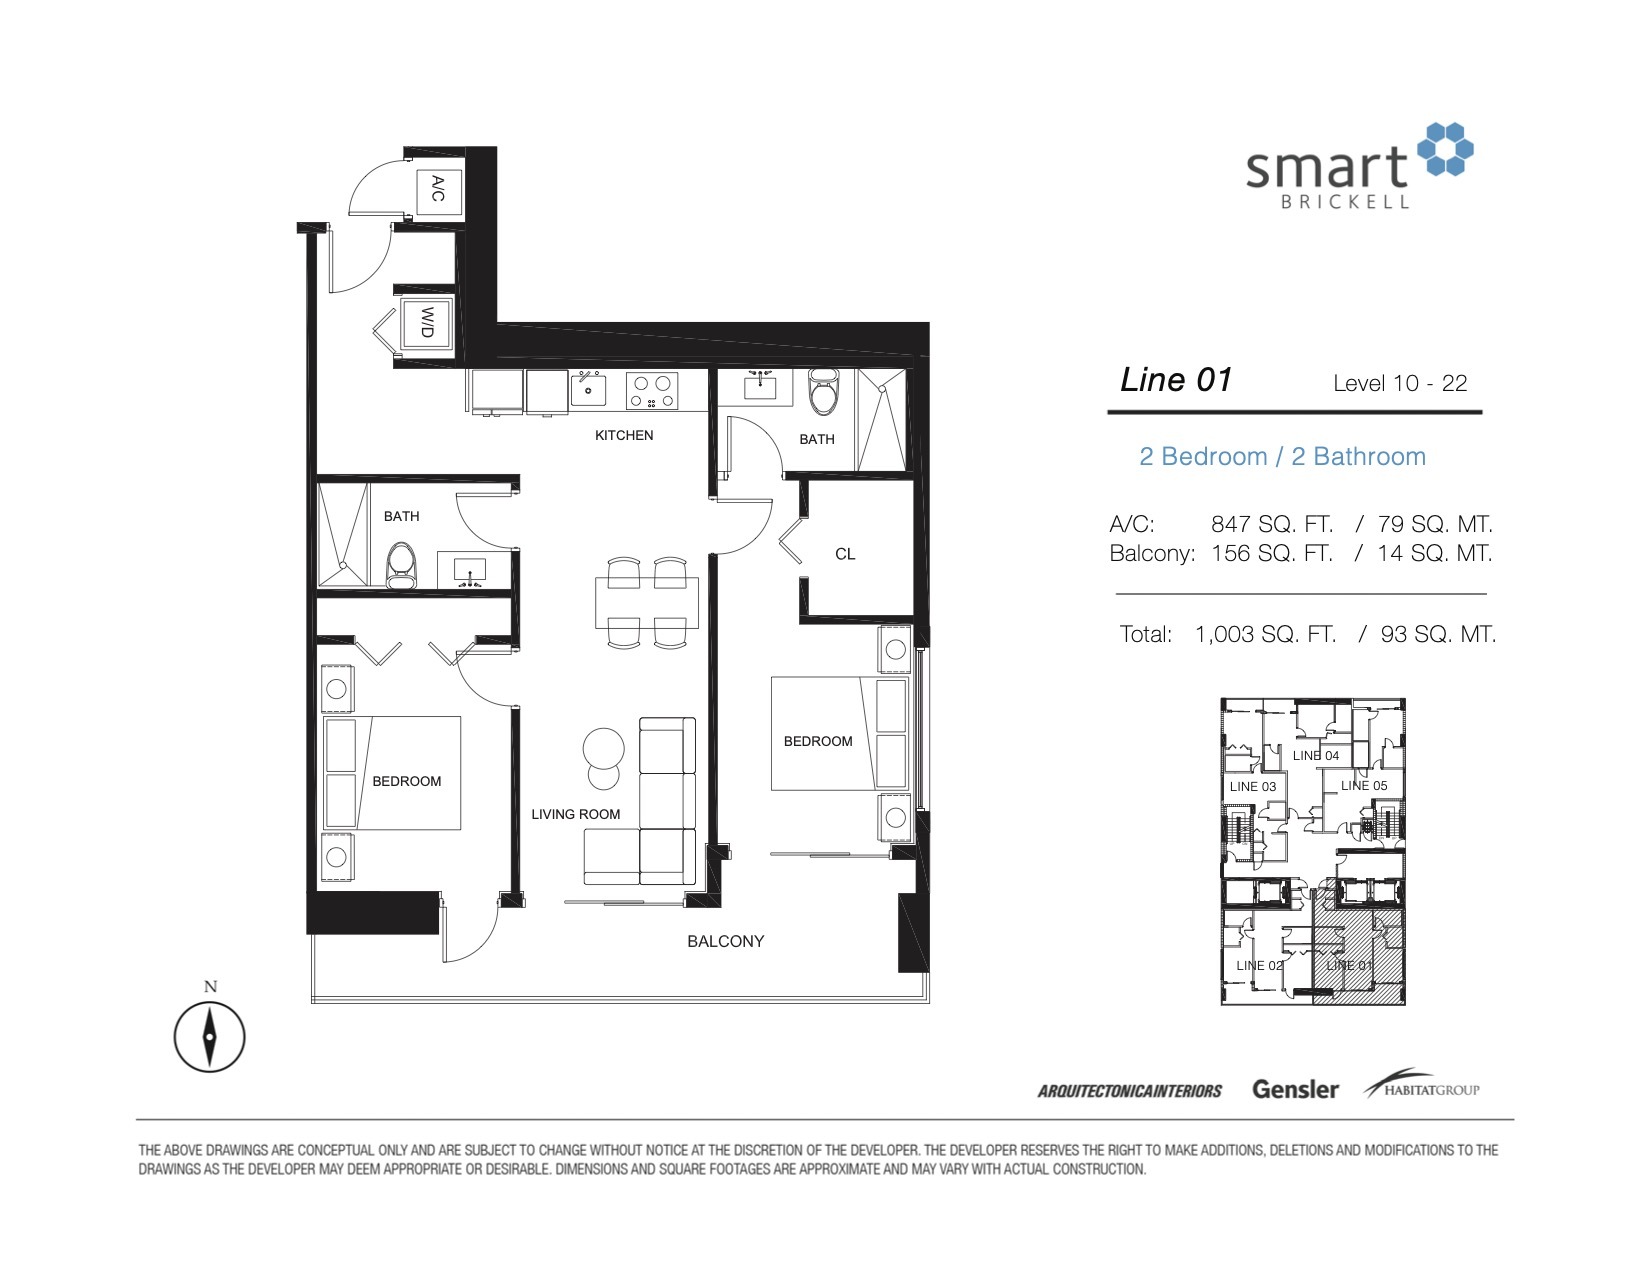 Floor Plan for Smart Brickell Floorplans, Line 01 Level 10-22